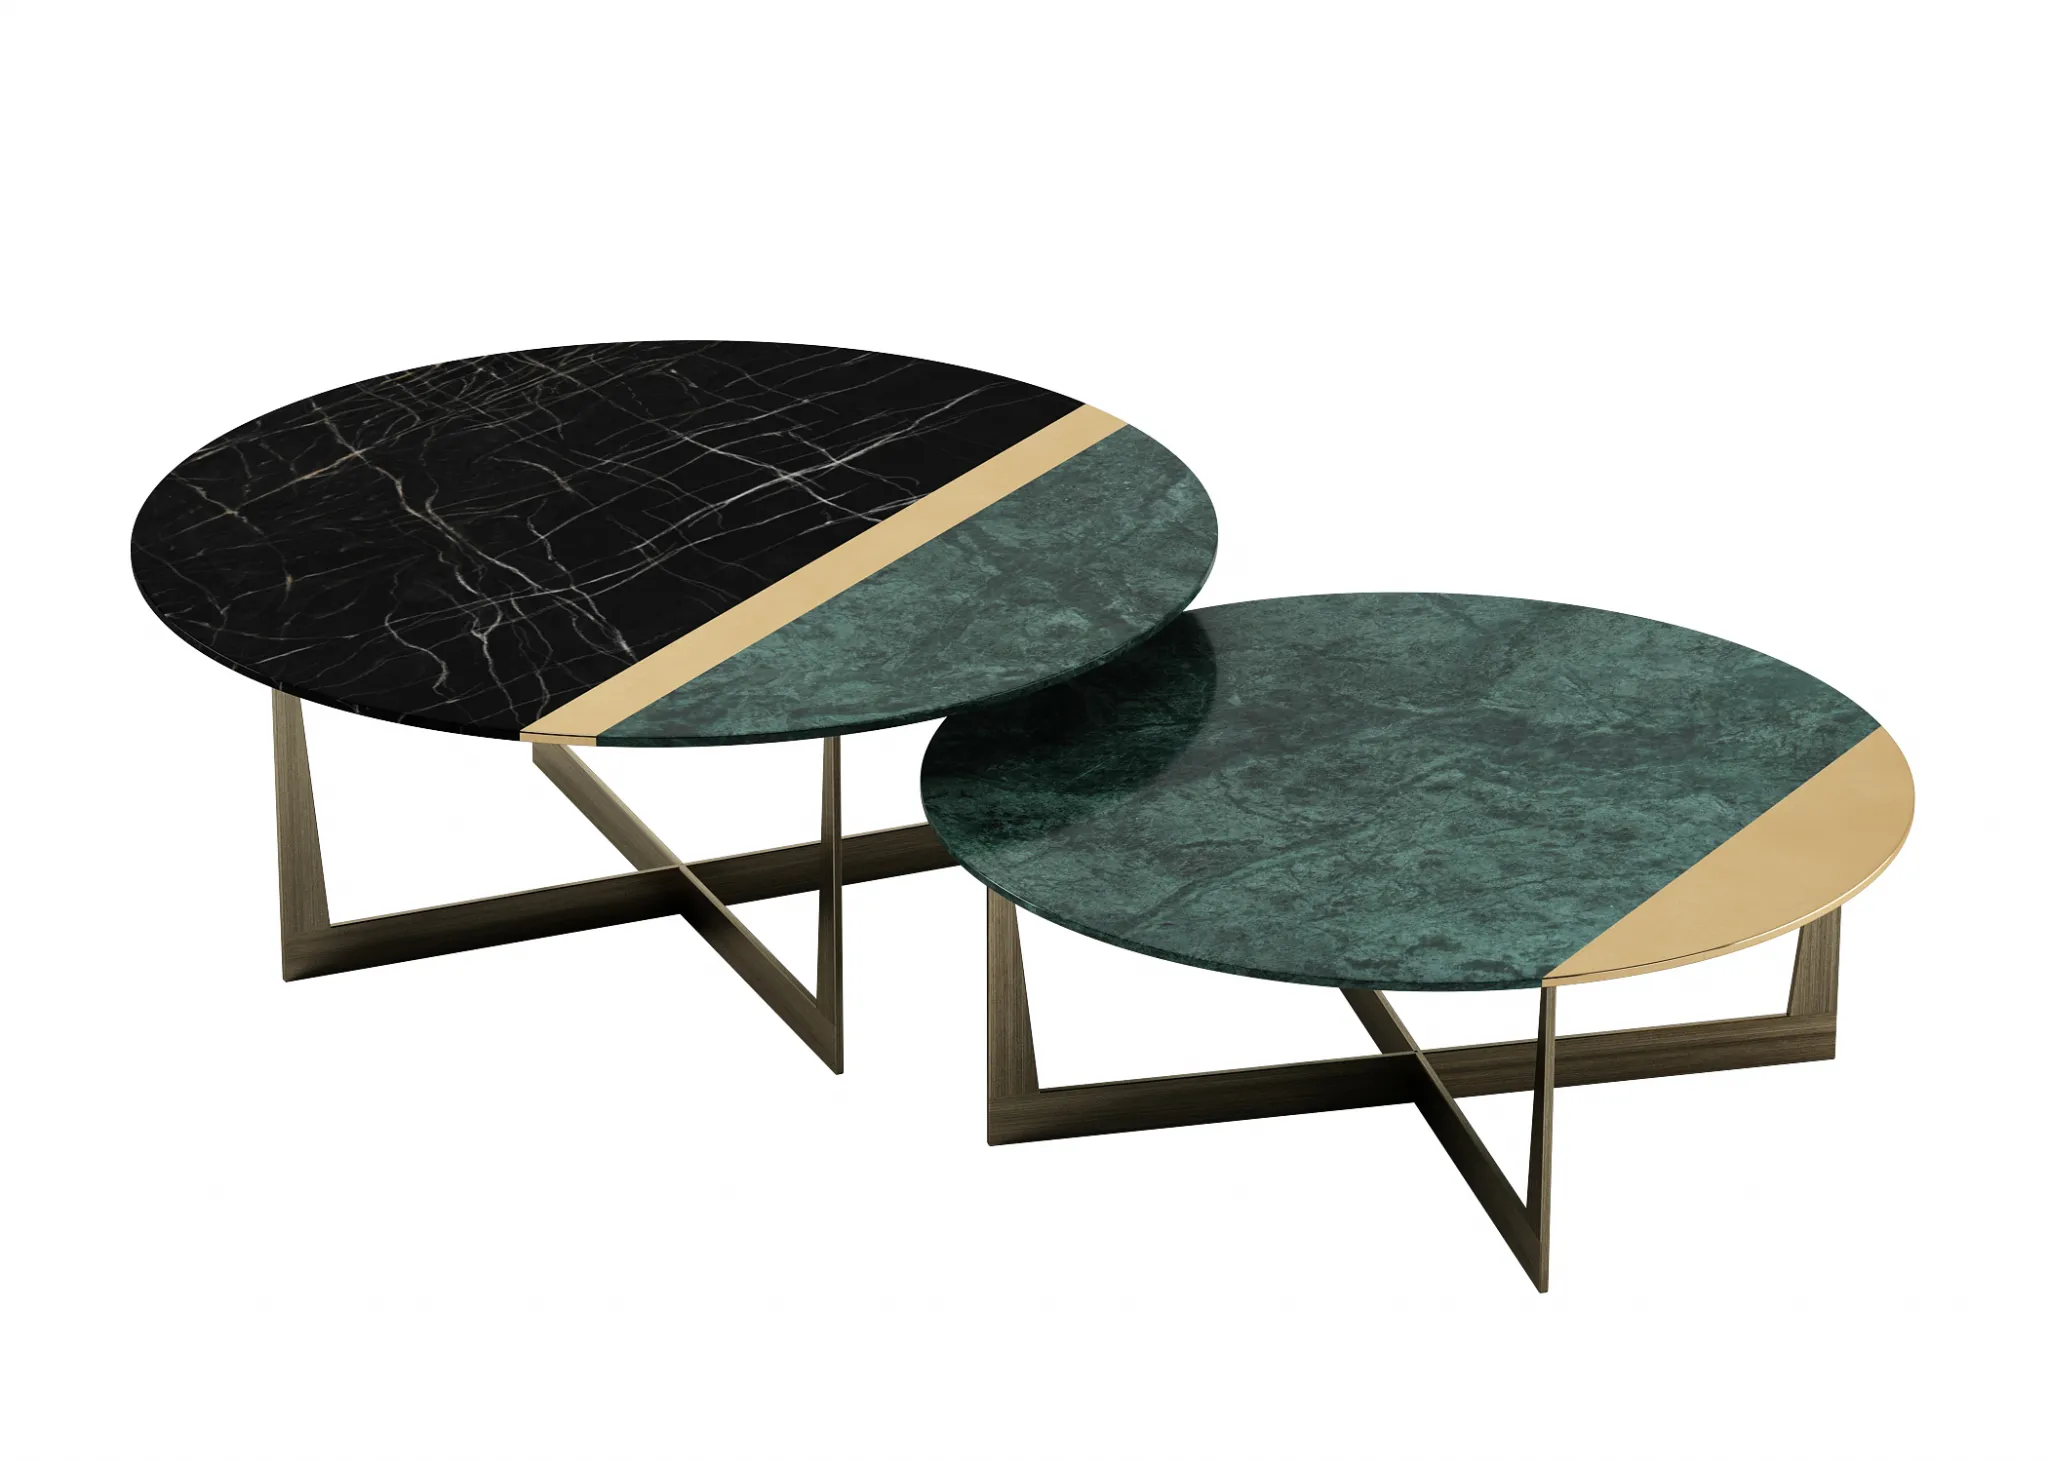 FURNITURE 3D MODELS – TABLES – 0090